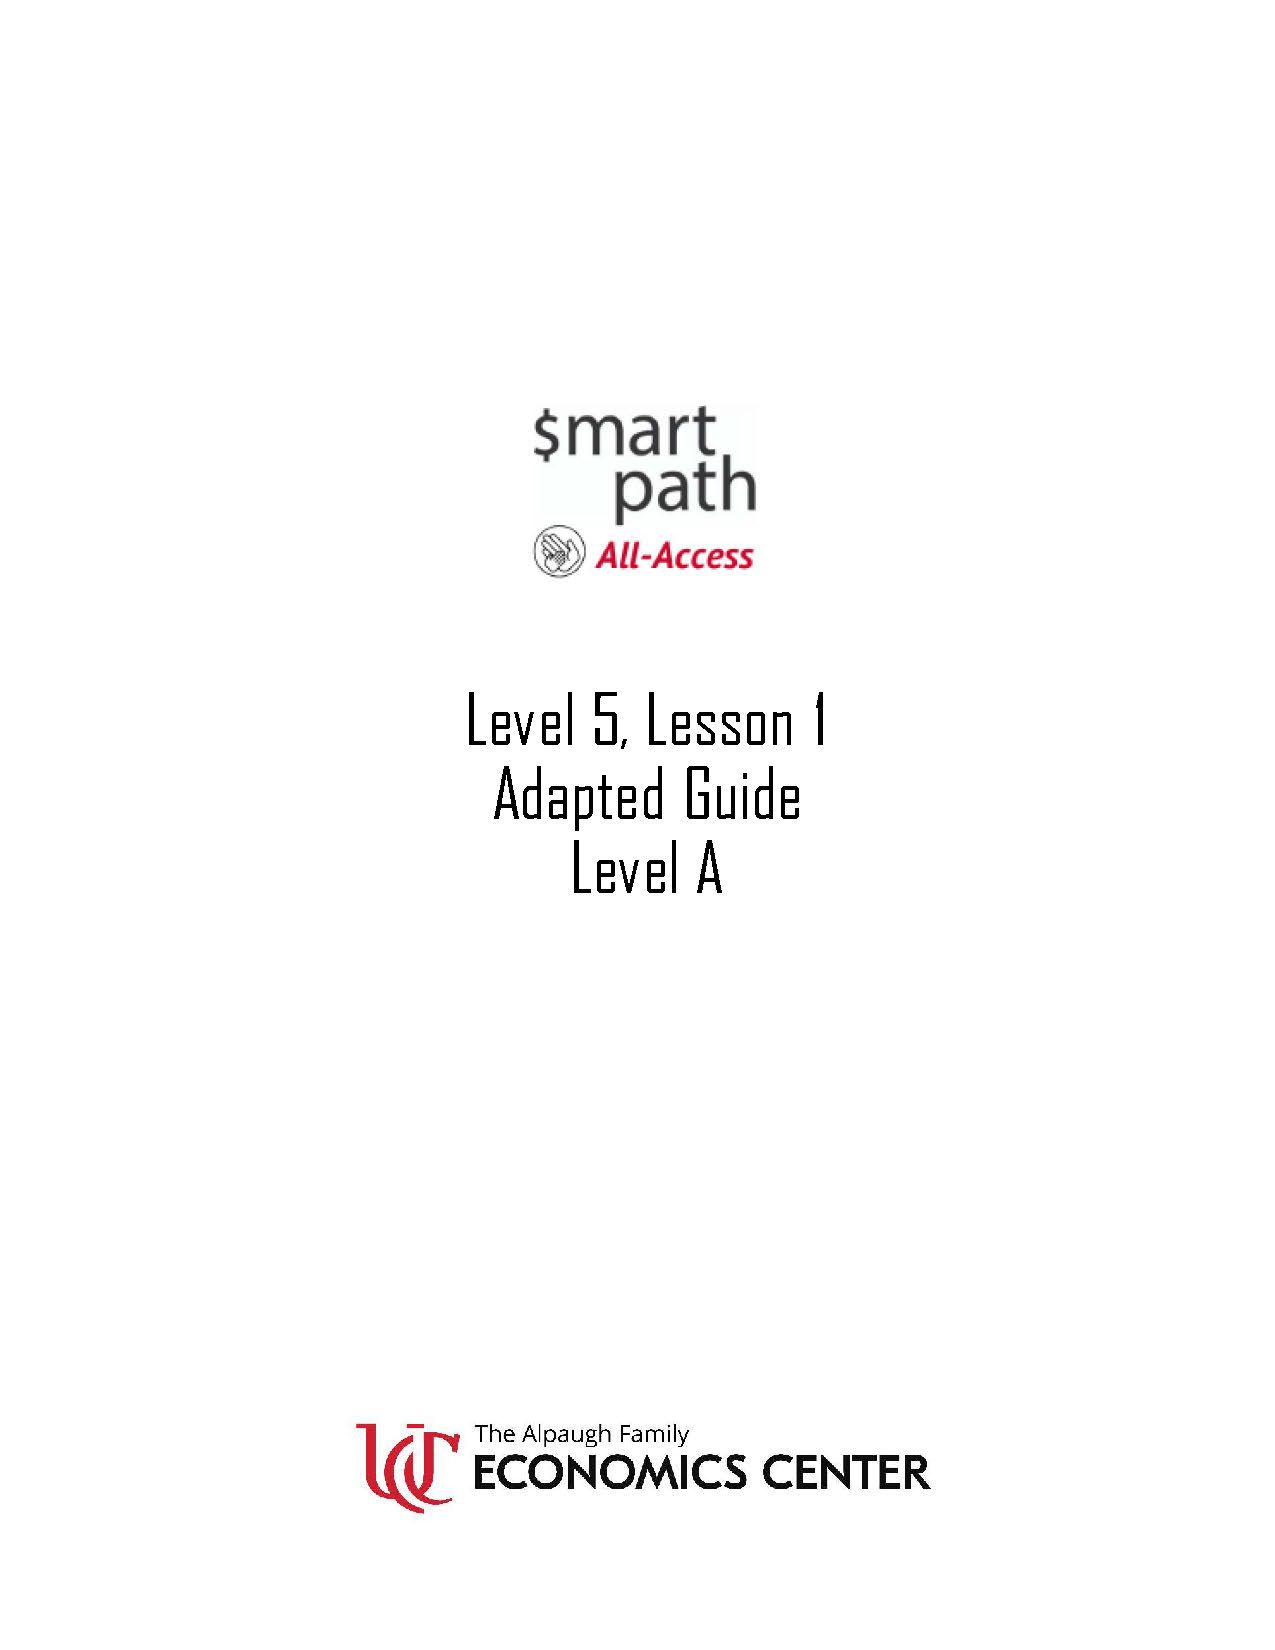 Level 5 lesson 1 cover